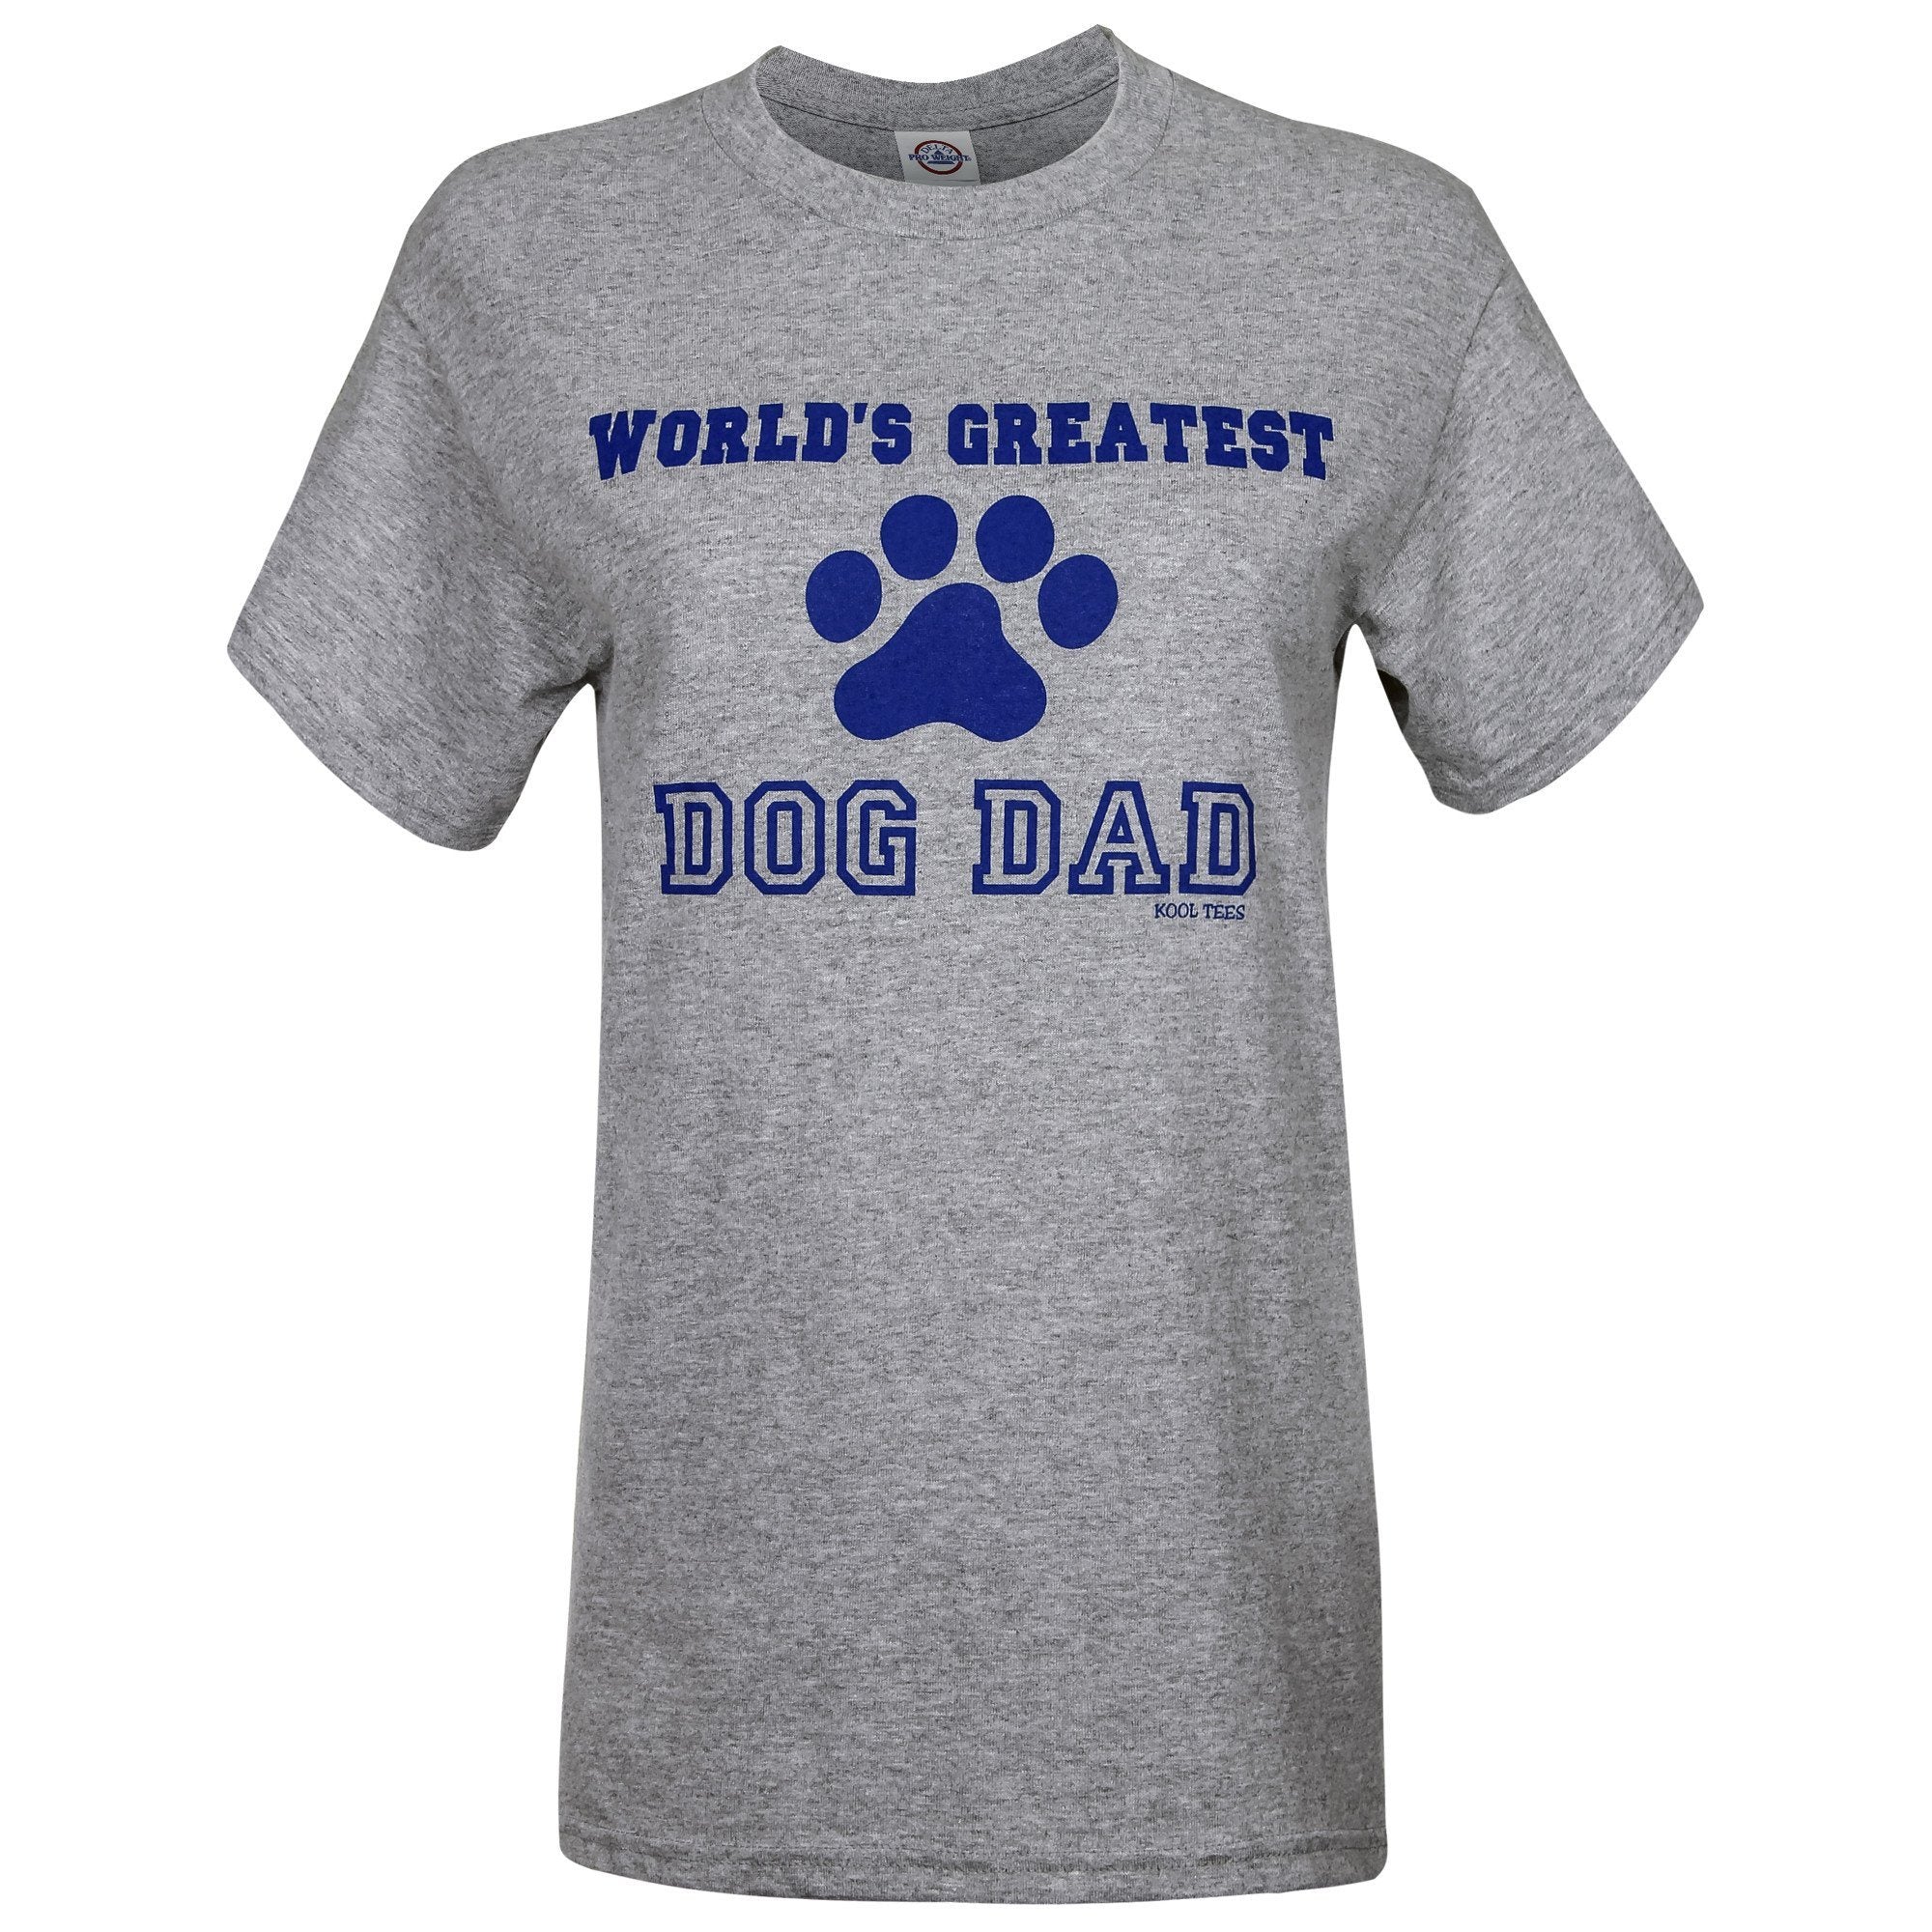 World's Greatest Dog Dad T-Shirt - S